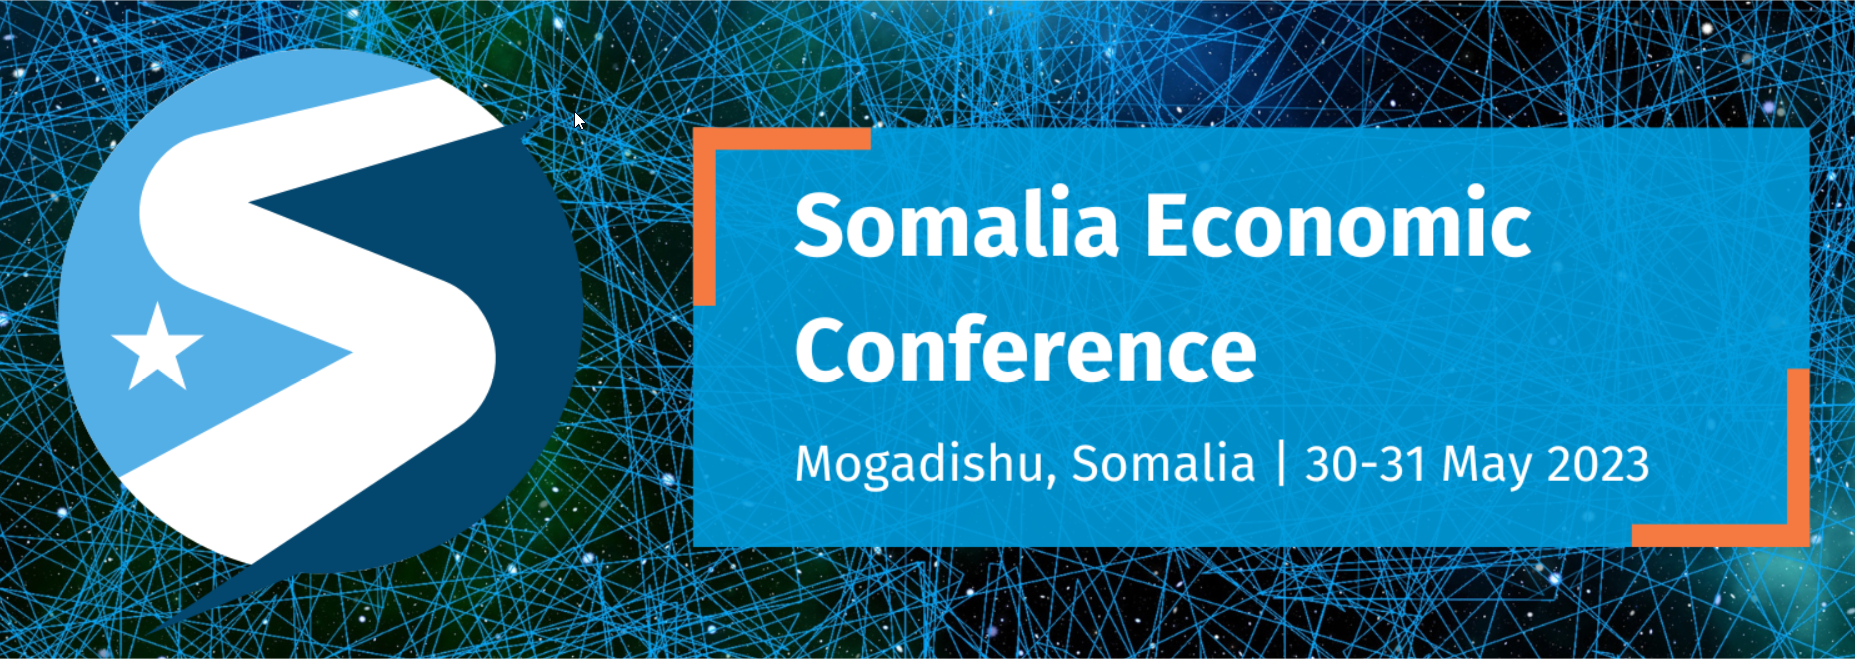 Somalia Economic Conference